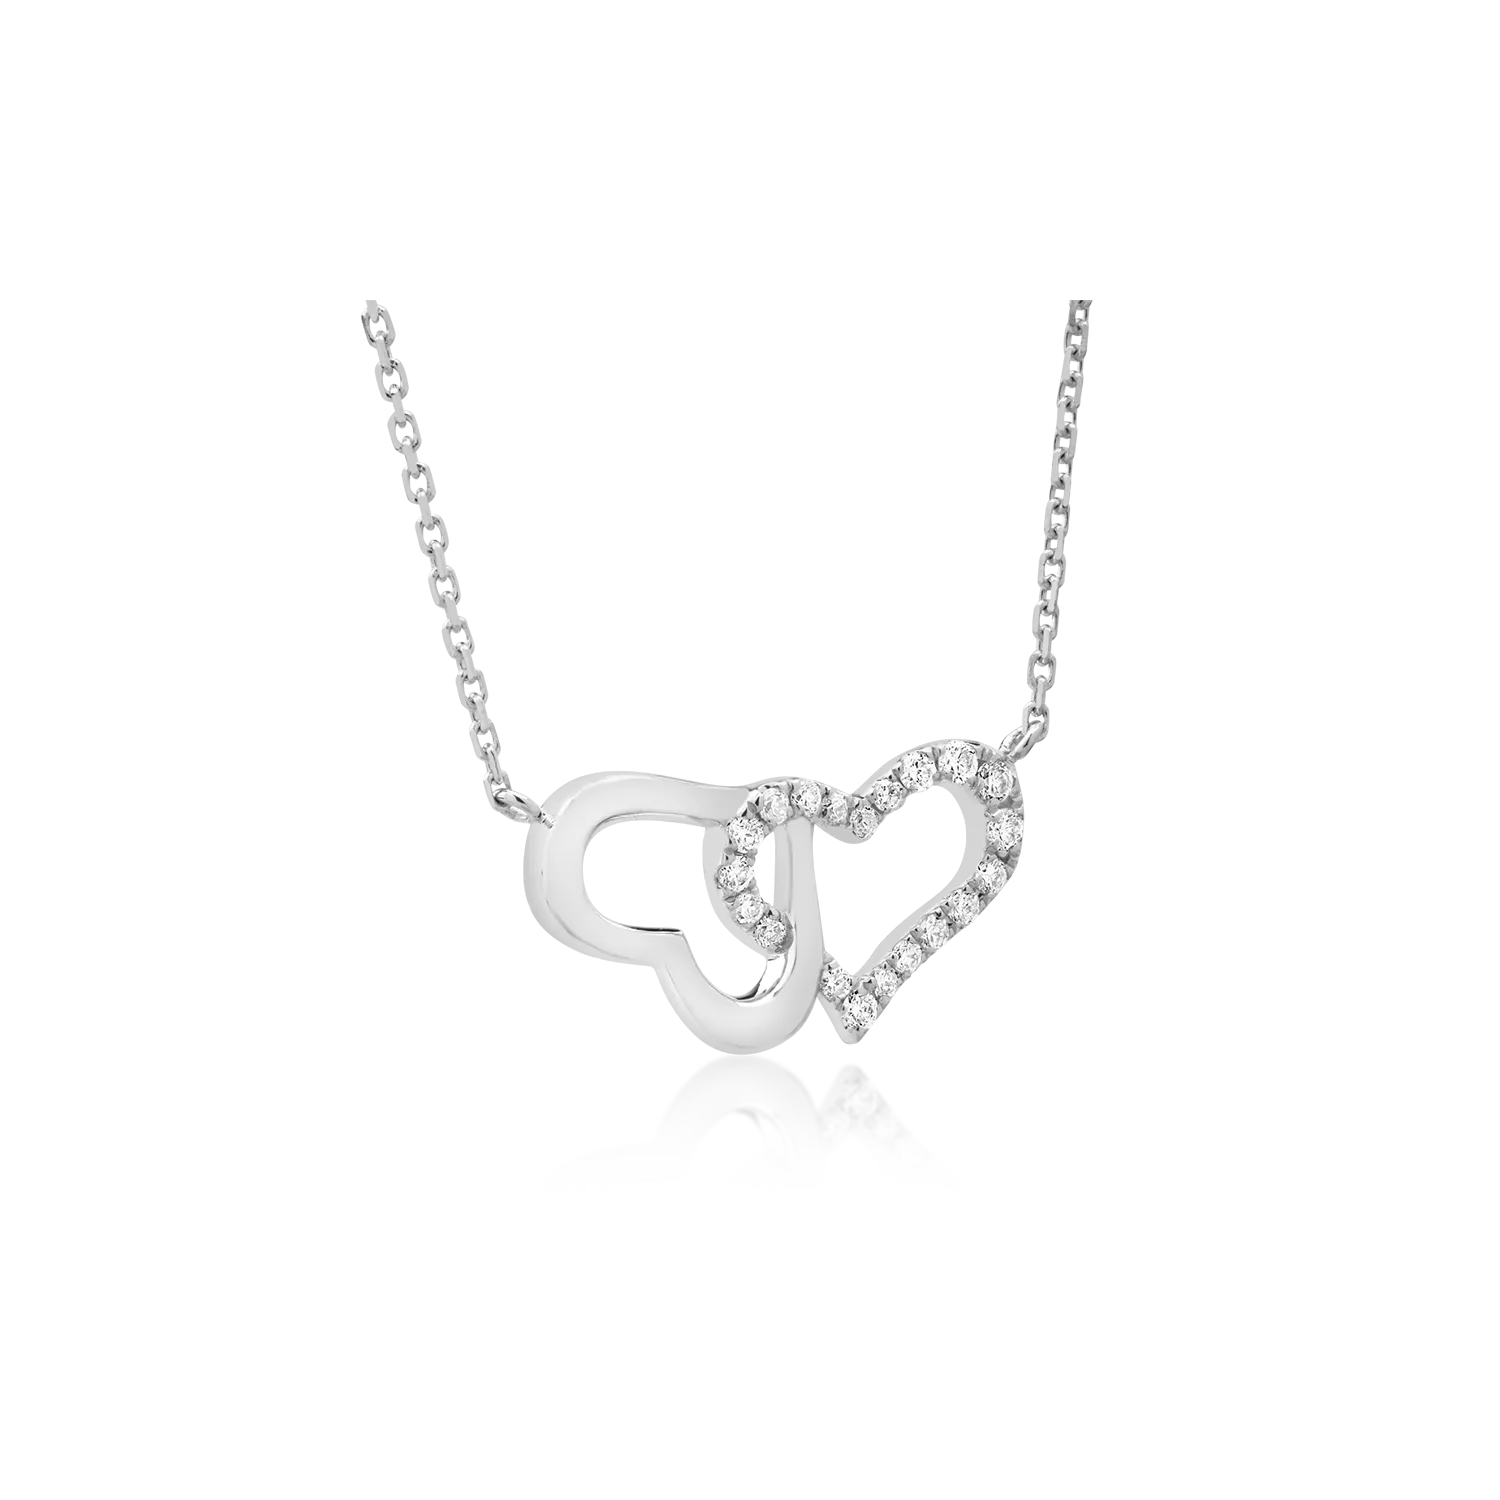 18K white gold hearts pendant chain with 0.053ct diamonds